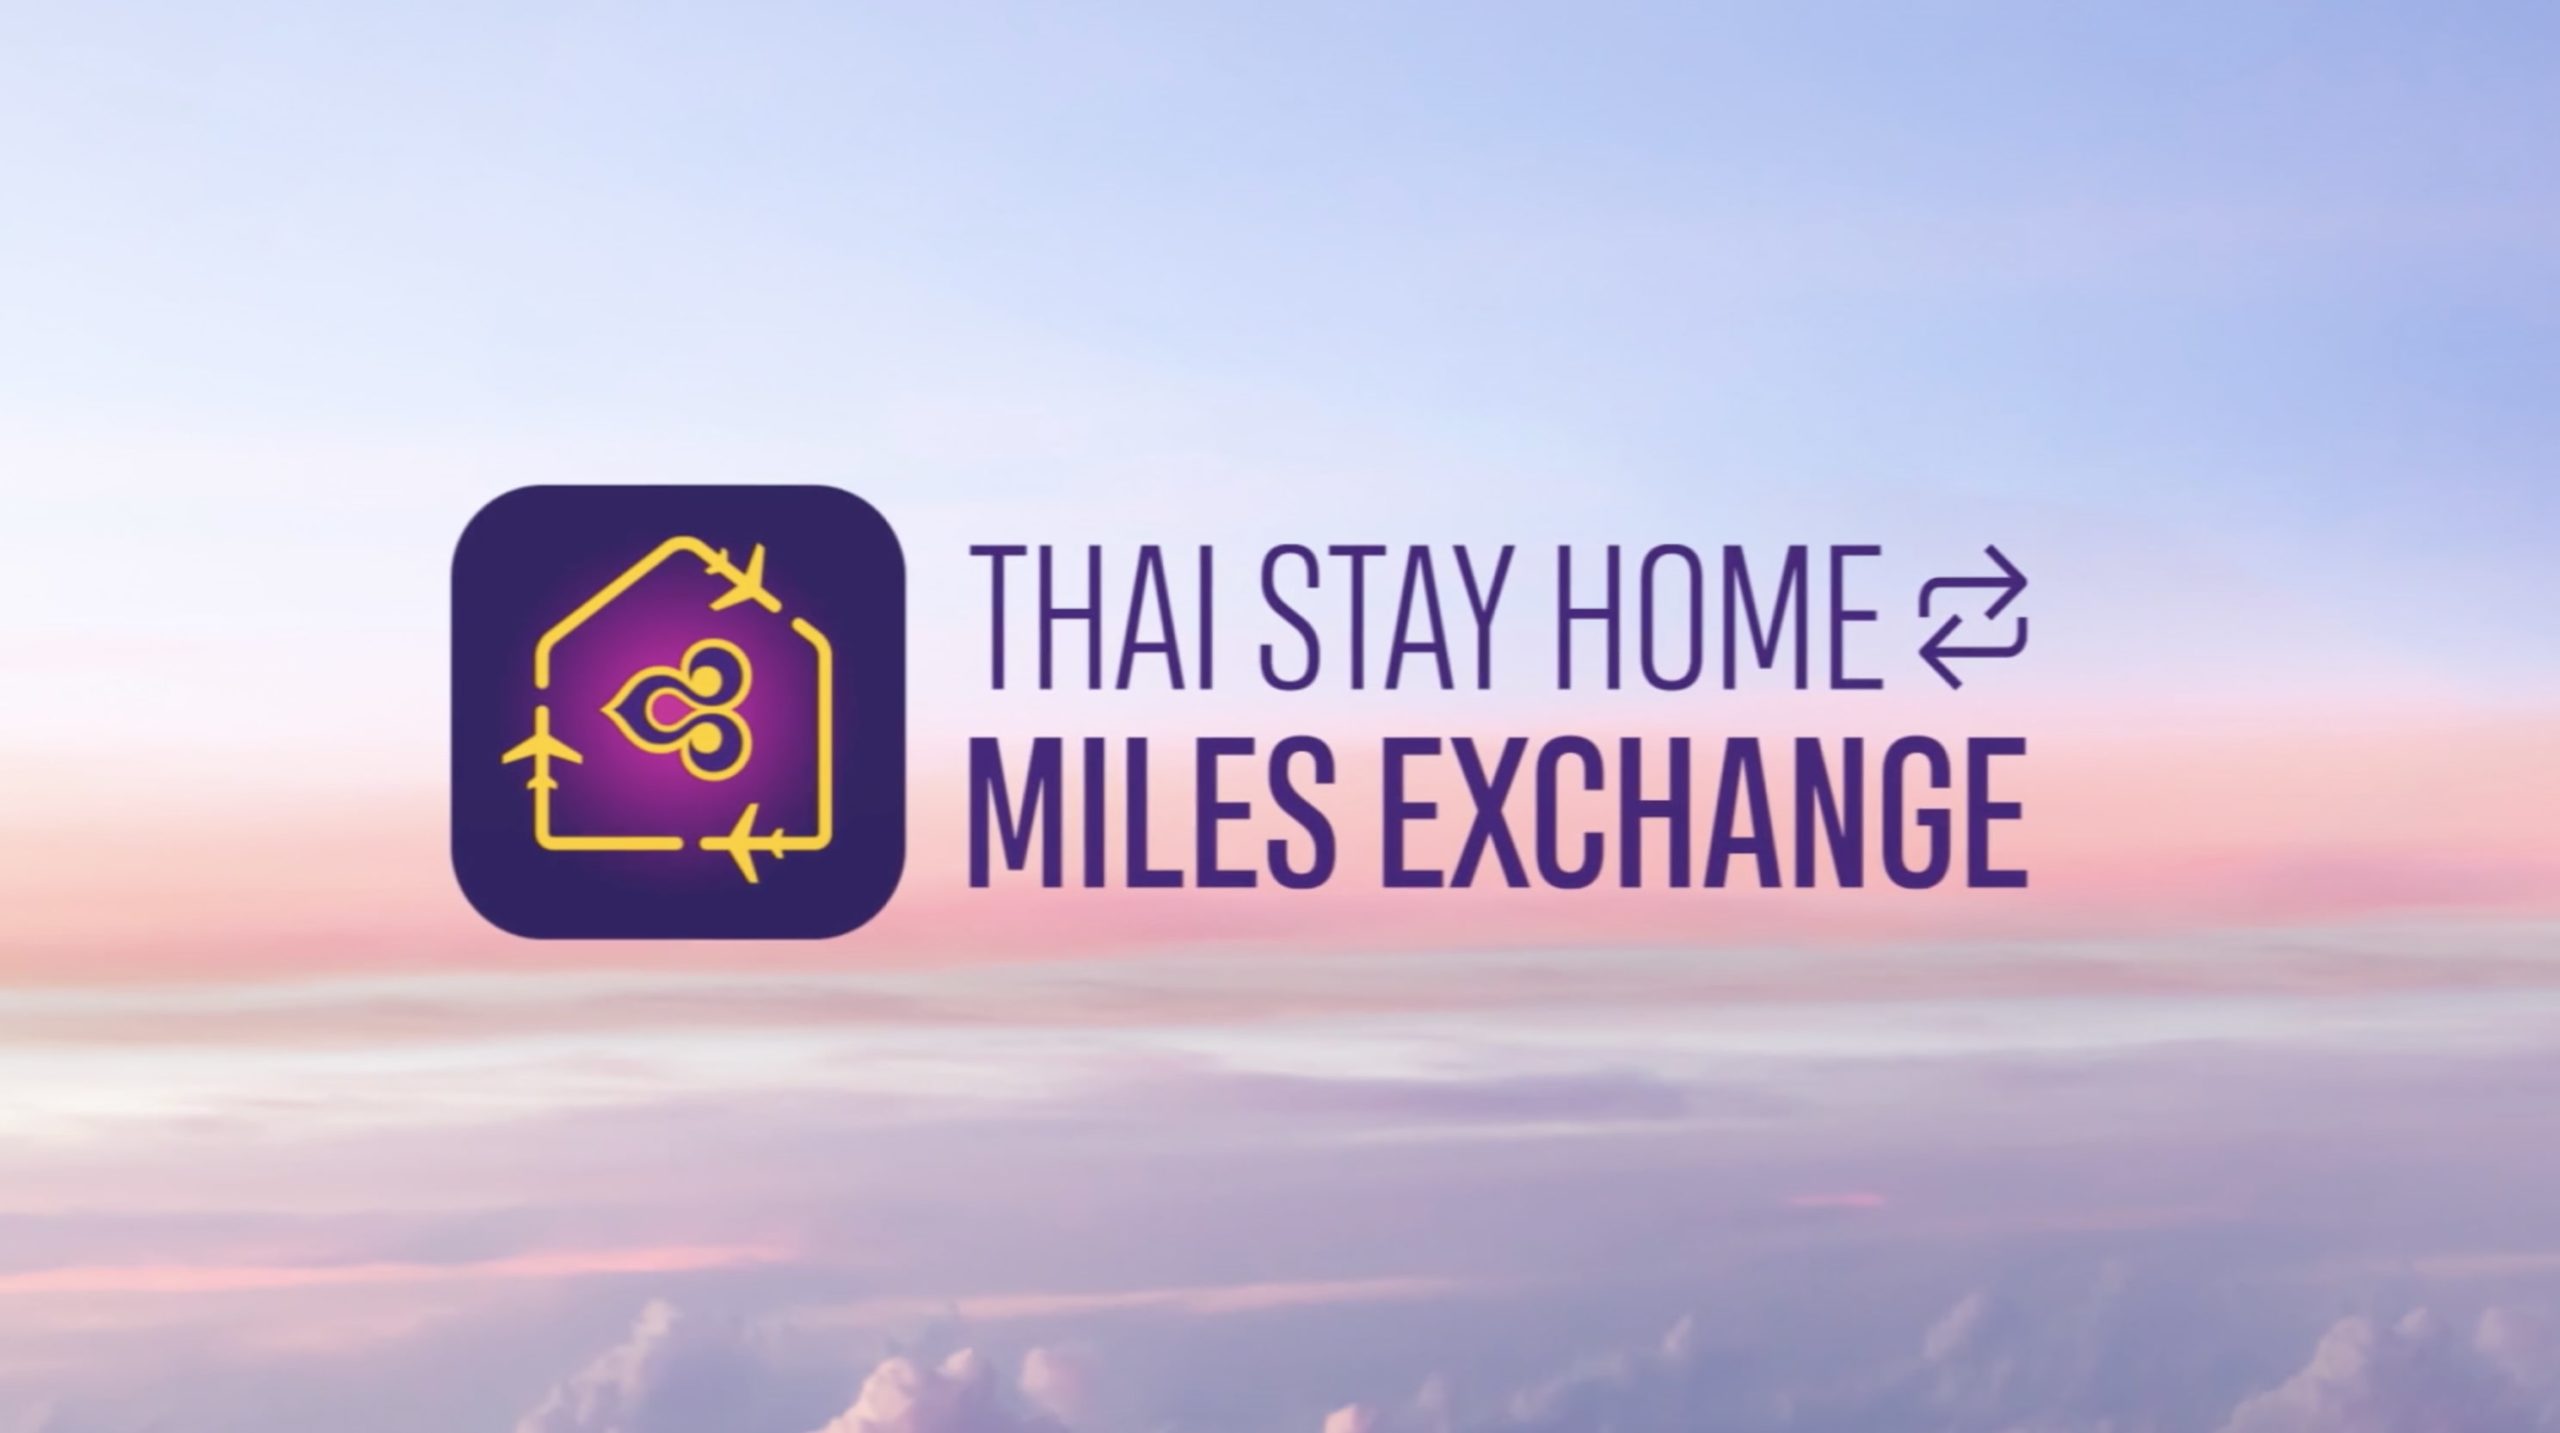 Thai Airways: Stay Home Miles Exchange